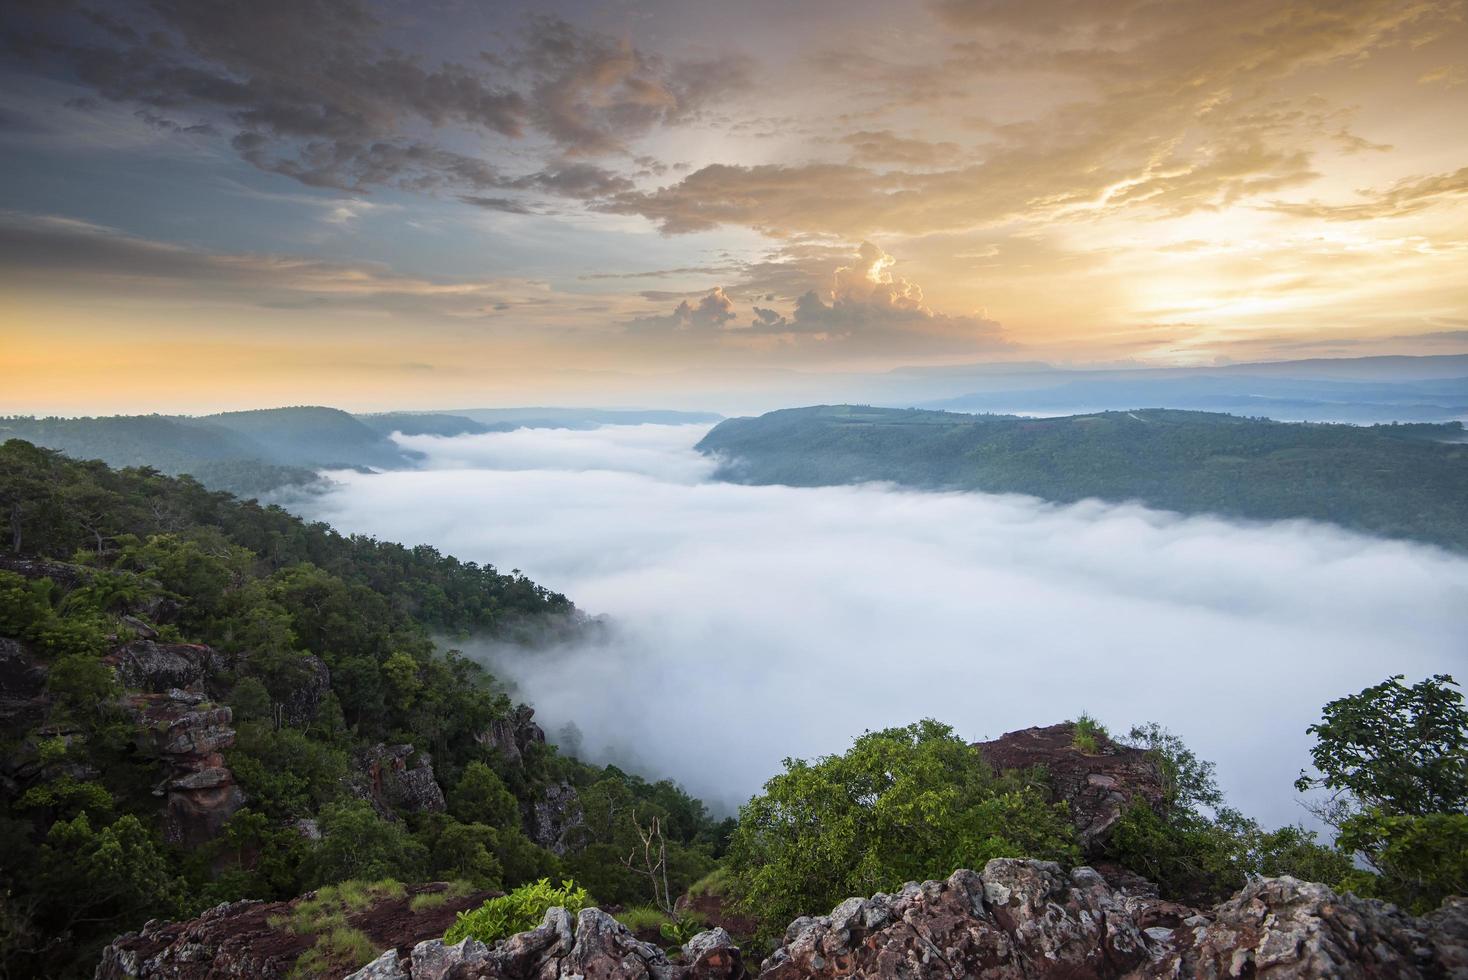 mistig bergboslandschap in de ochtend zonsopgangen mist en bosboommening bovenop - mistige ochtendmist in vallei mooie hemel in thailand aziatisch foto